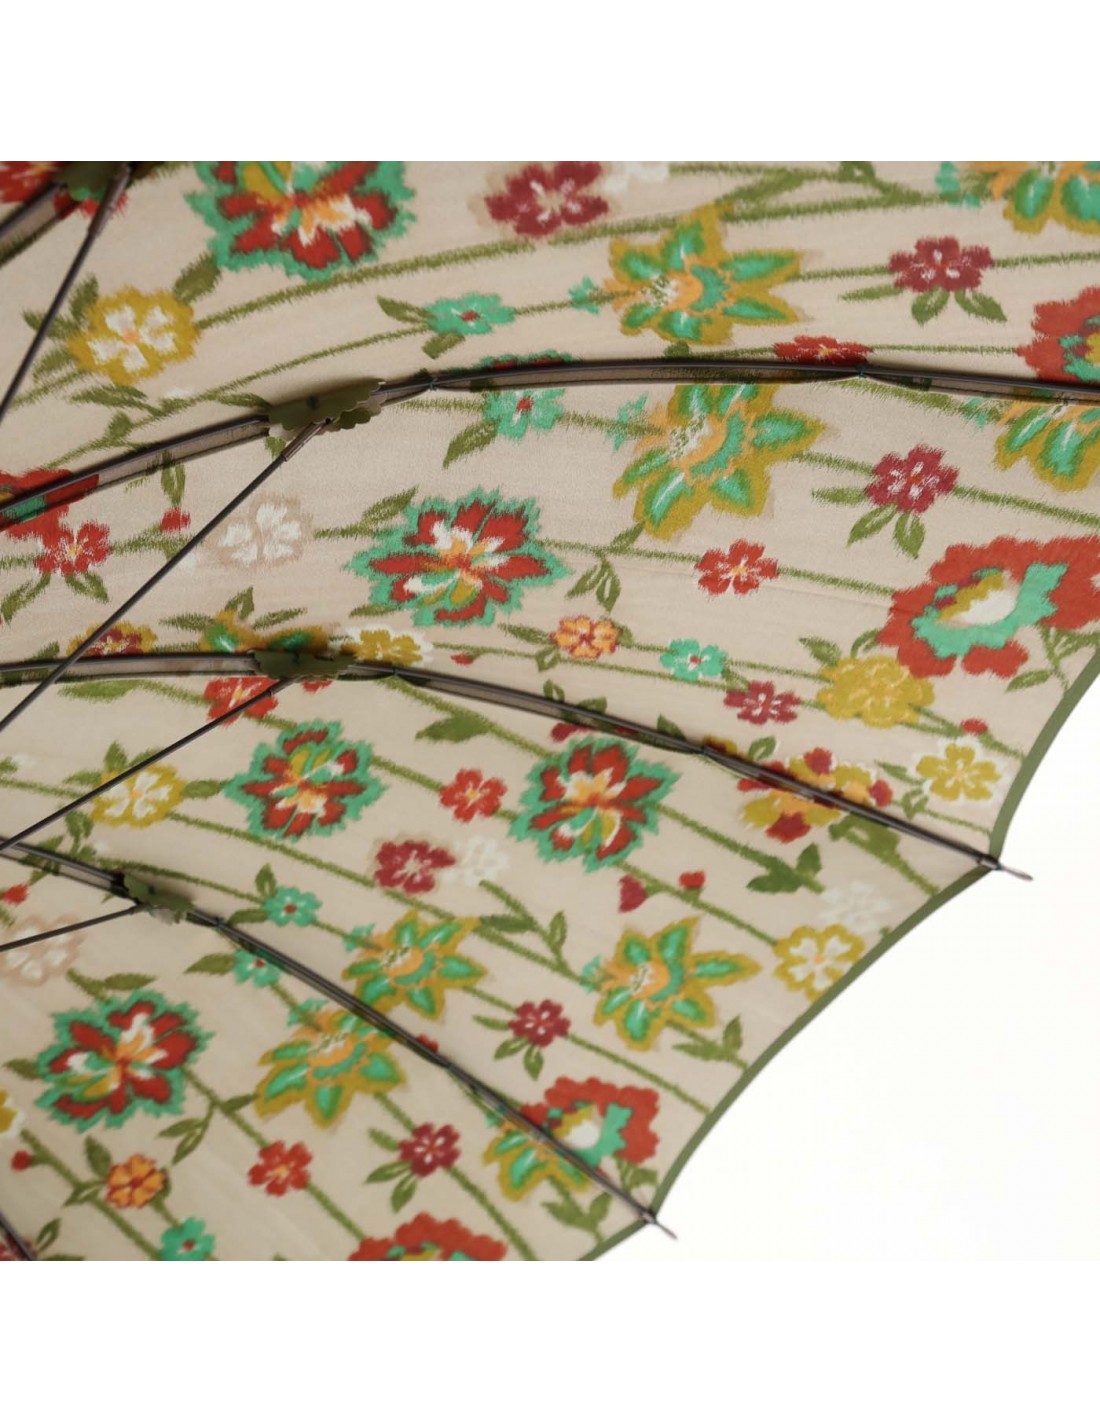 Damen Regenschirm Blumenmuster Grün